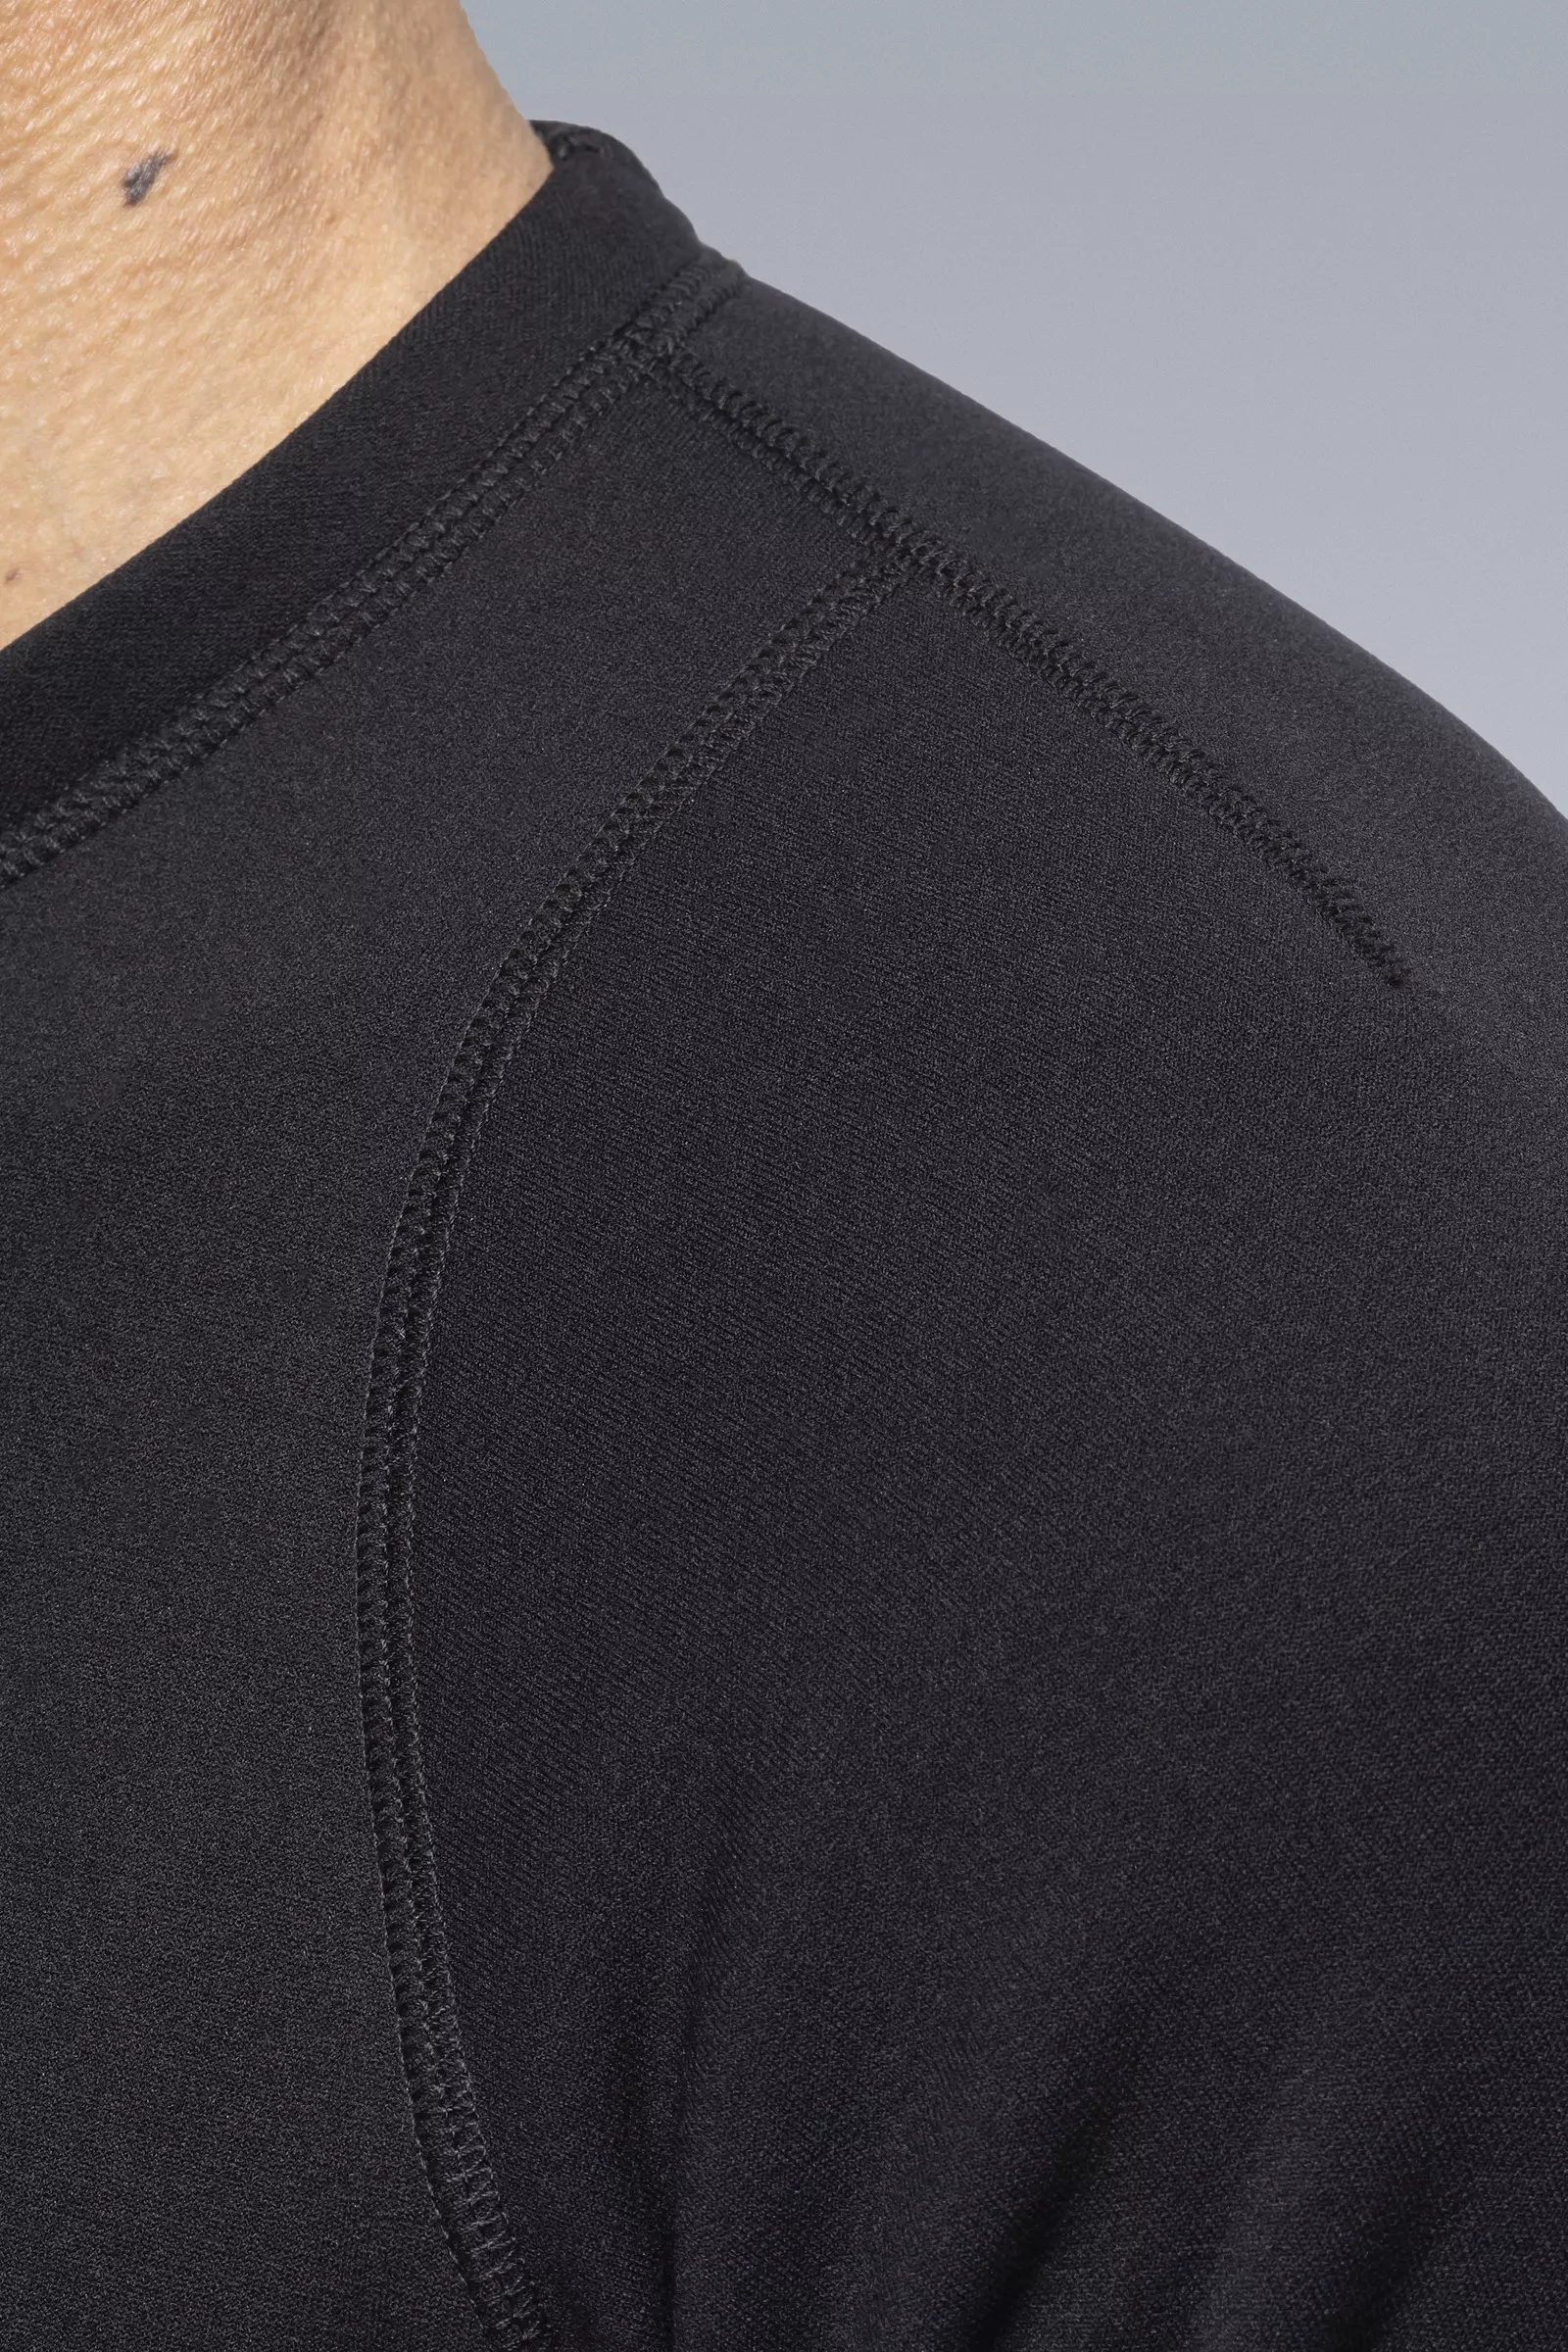 S27-PS Powerstretch® Longsleeve Shirt Black - 9